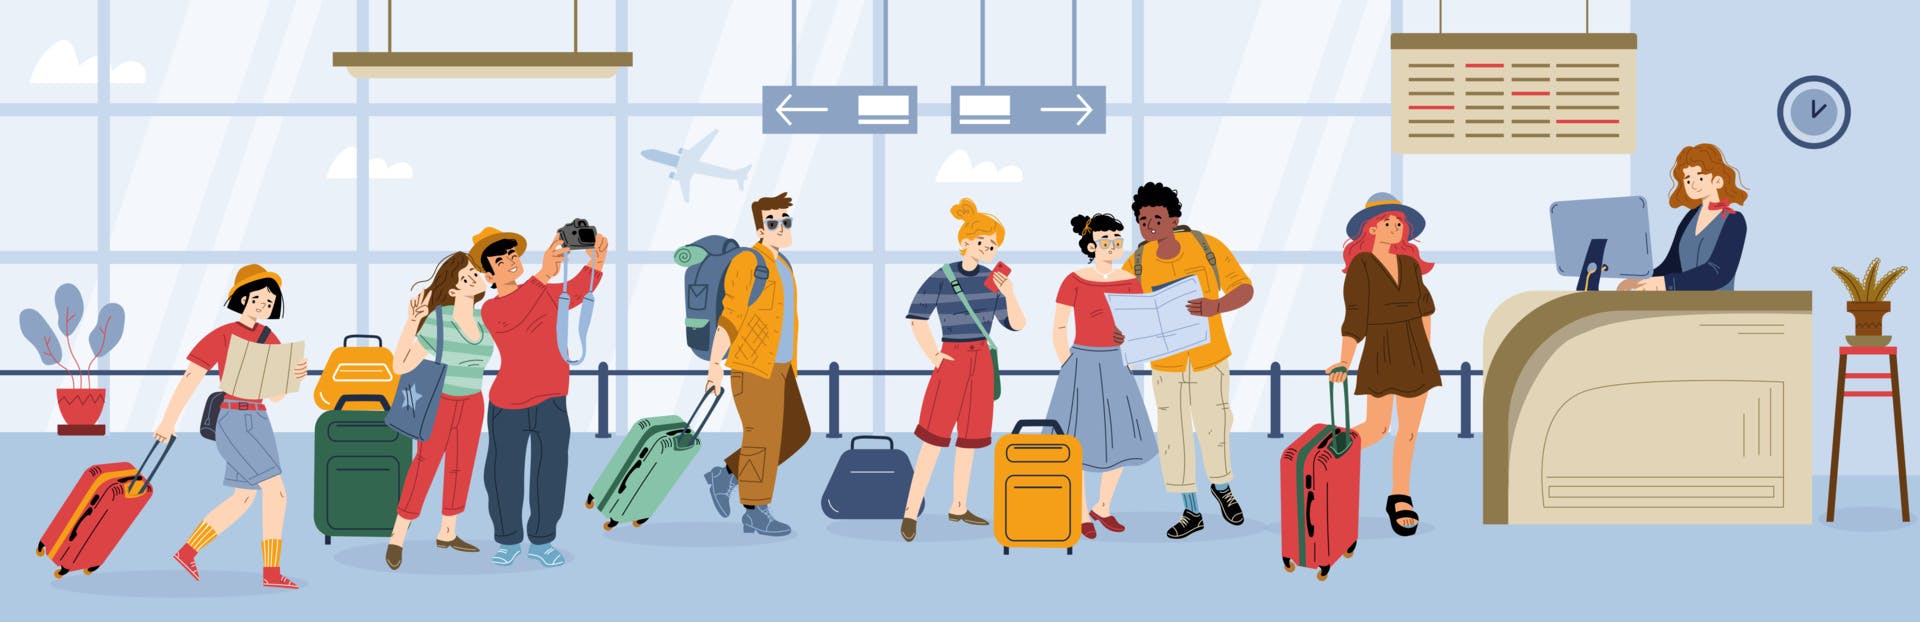 cartoon of passengers waiting to board a flight